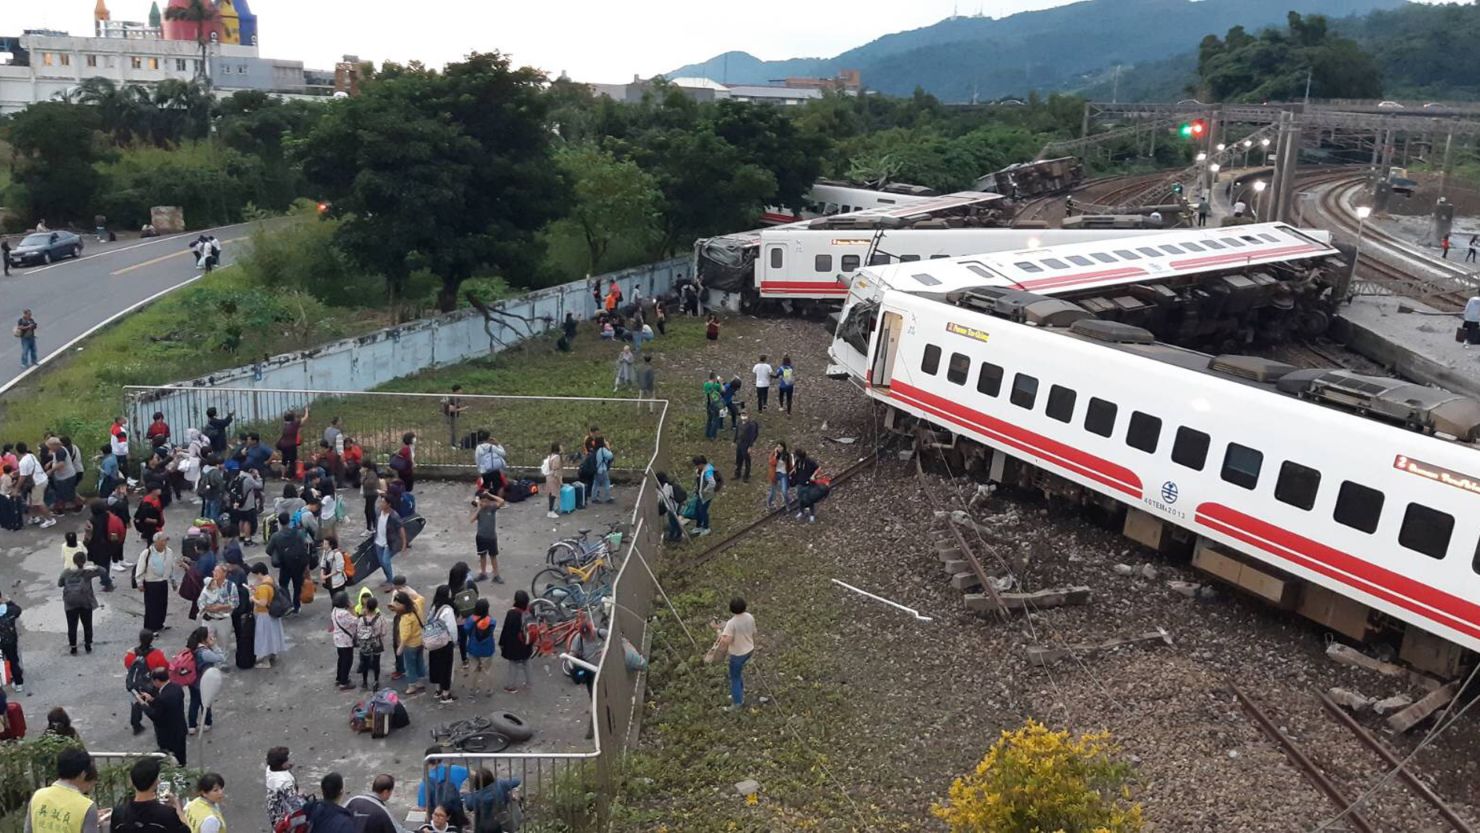 The derailed train in Yilan County, Taiwan, on Sunday.